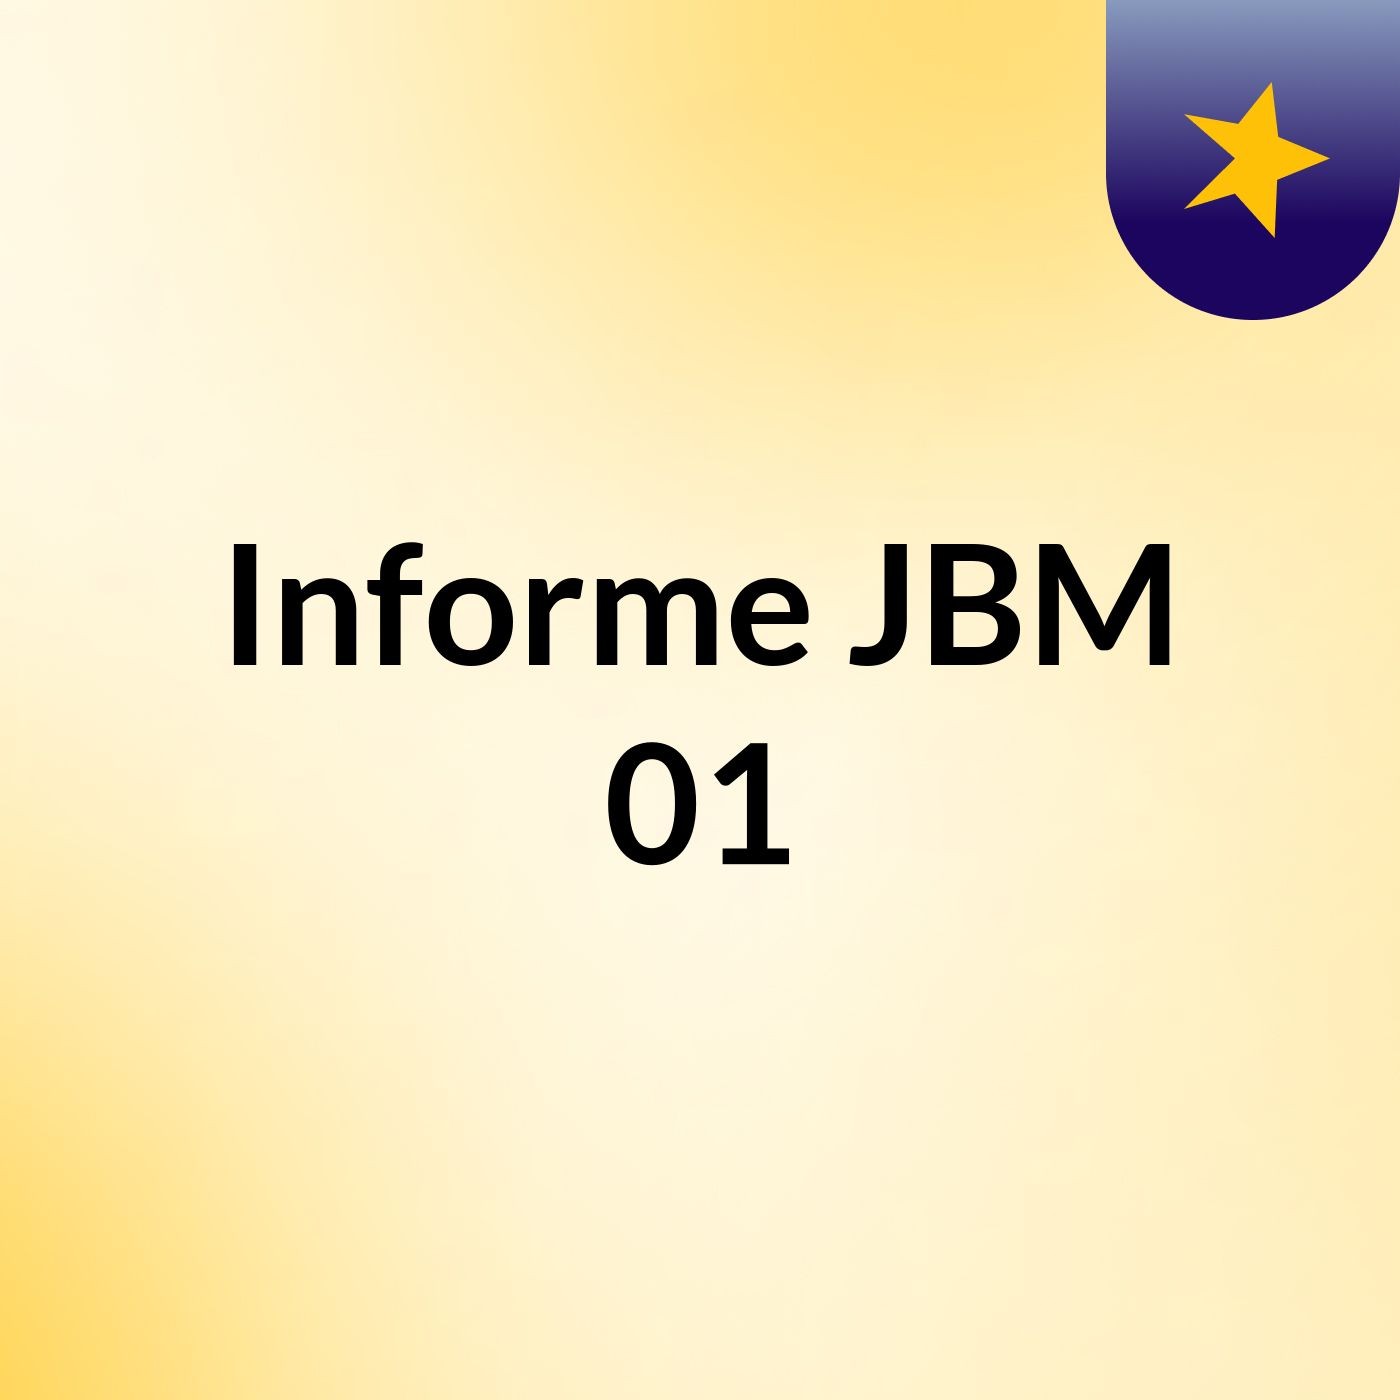 Informe JBM 01